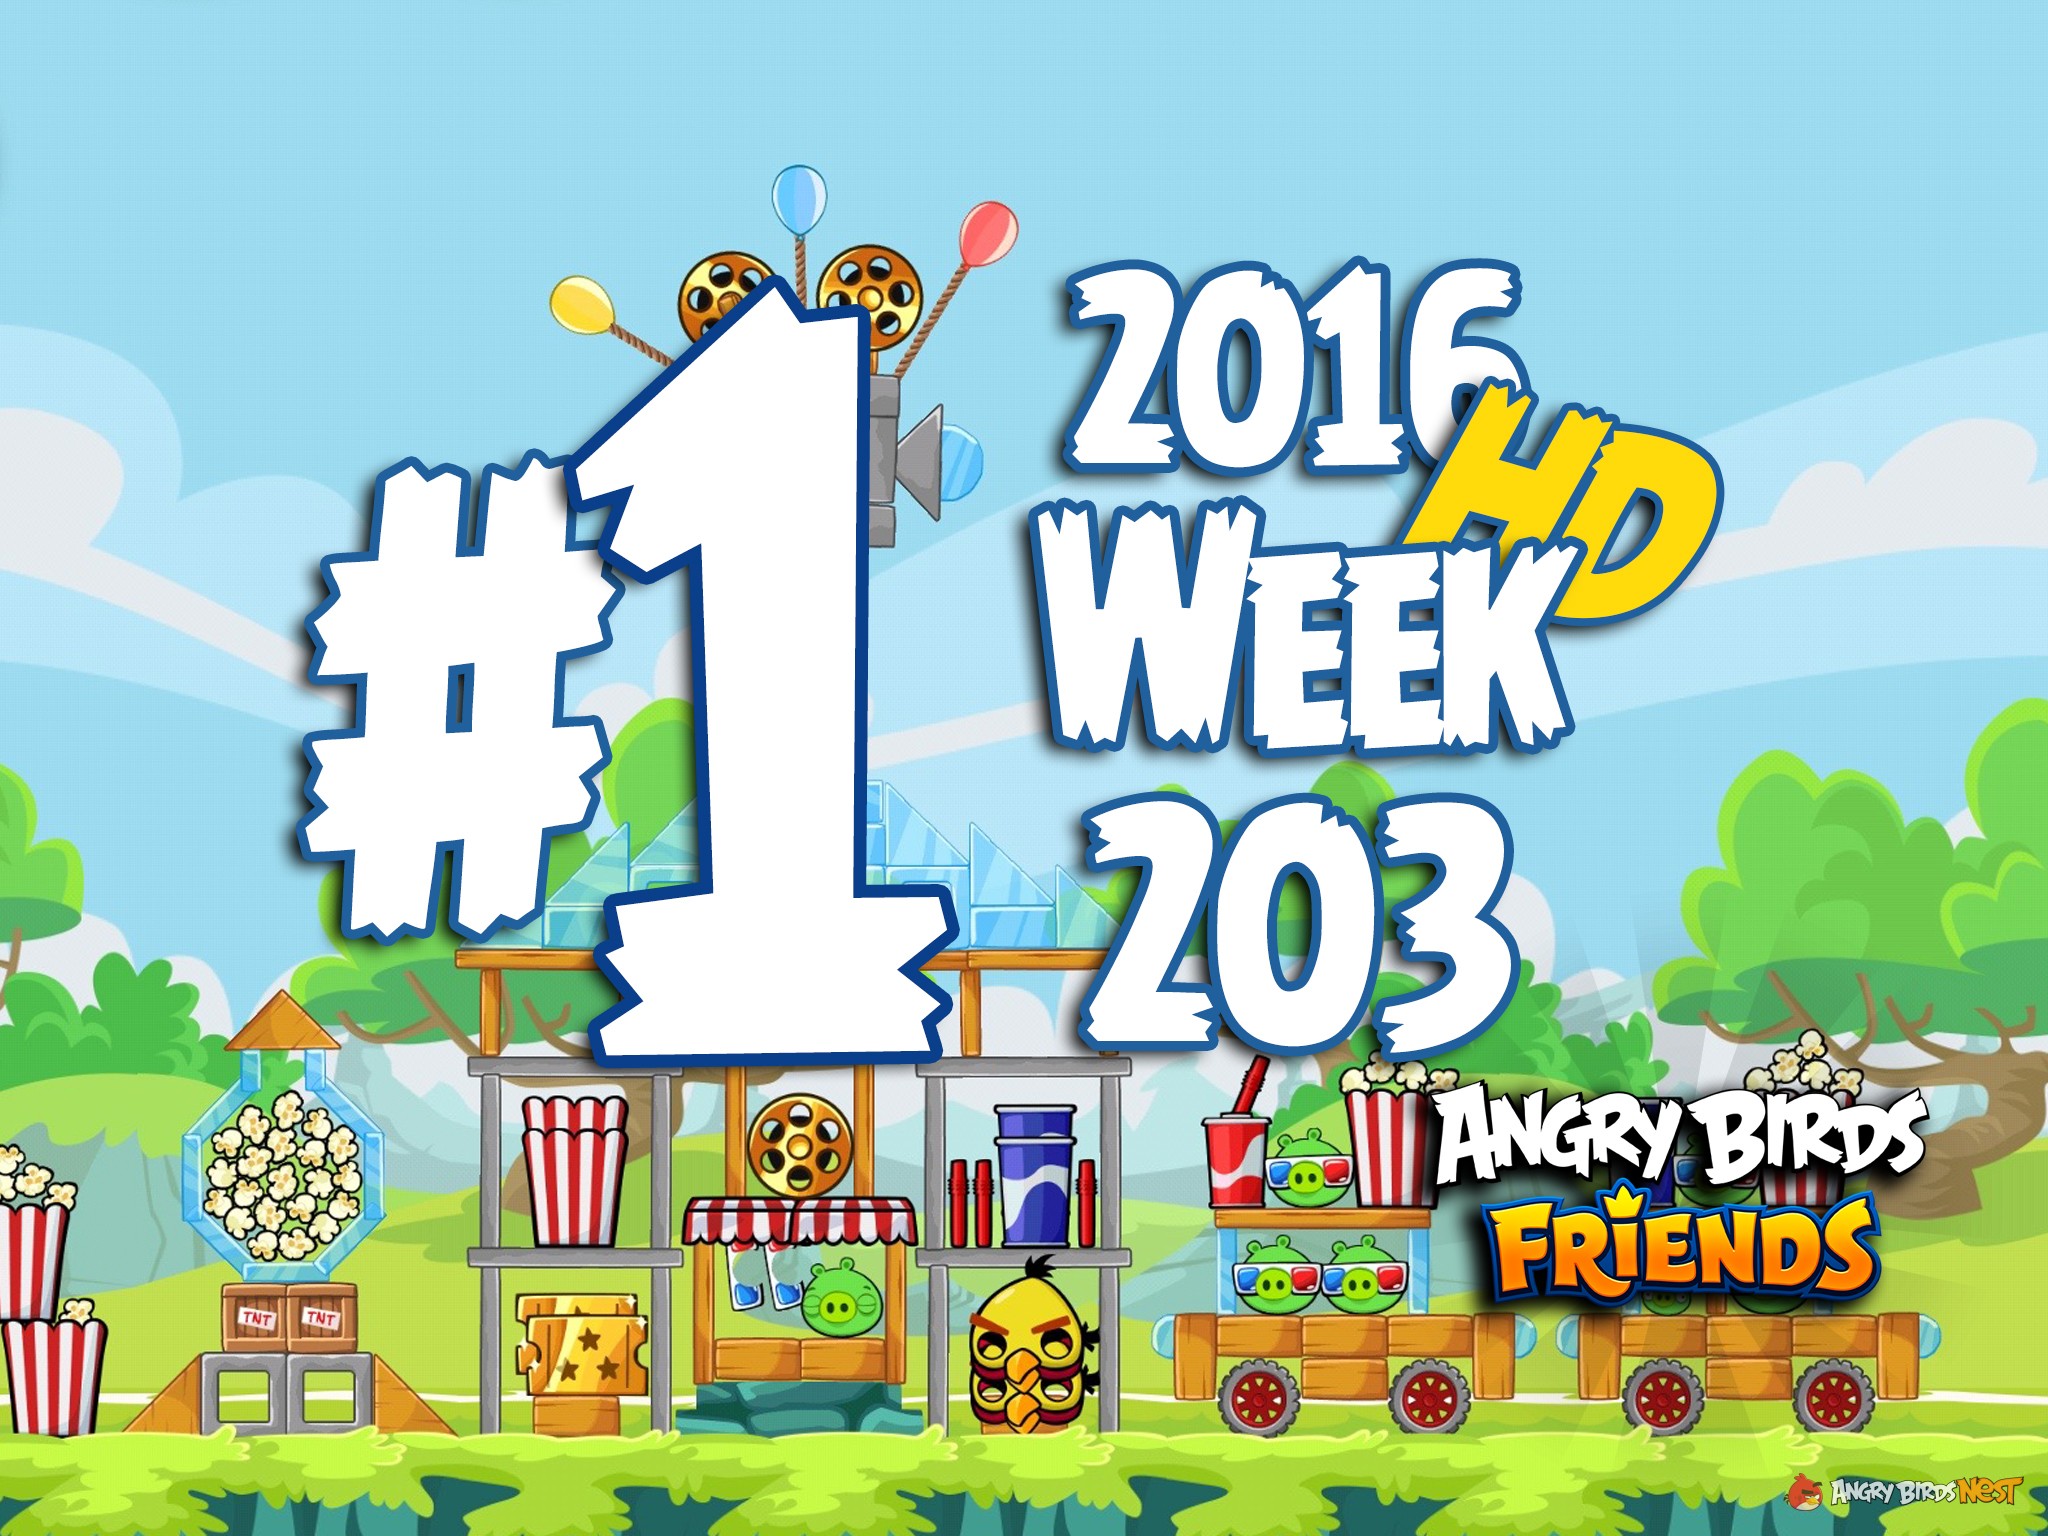 Angry Birds Friends Tournament Level 1 Week 203 Walkthrough | March 31st 2016